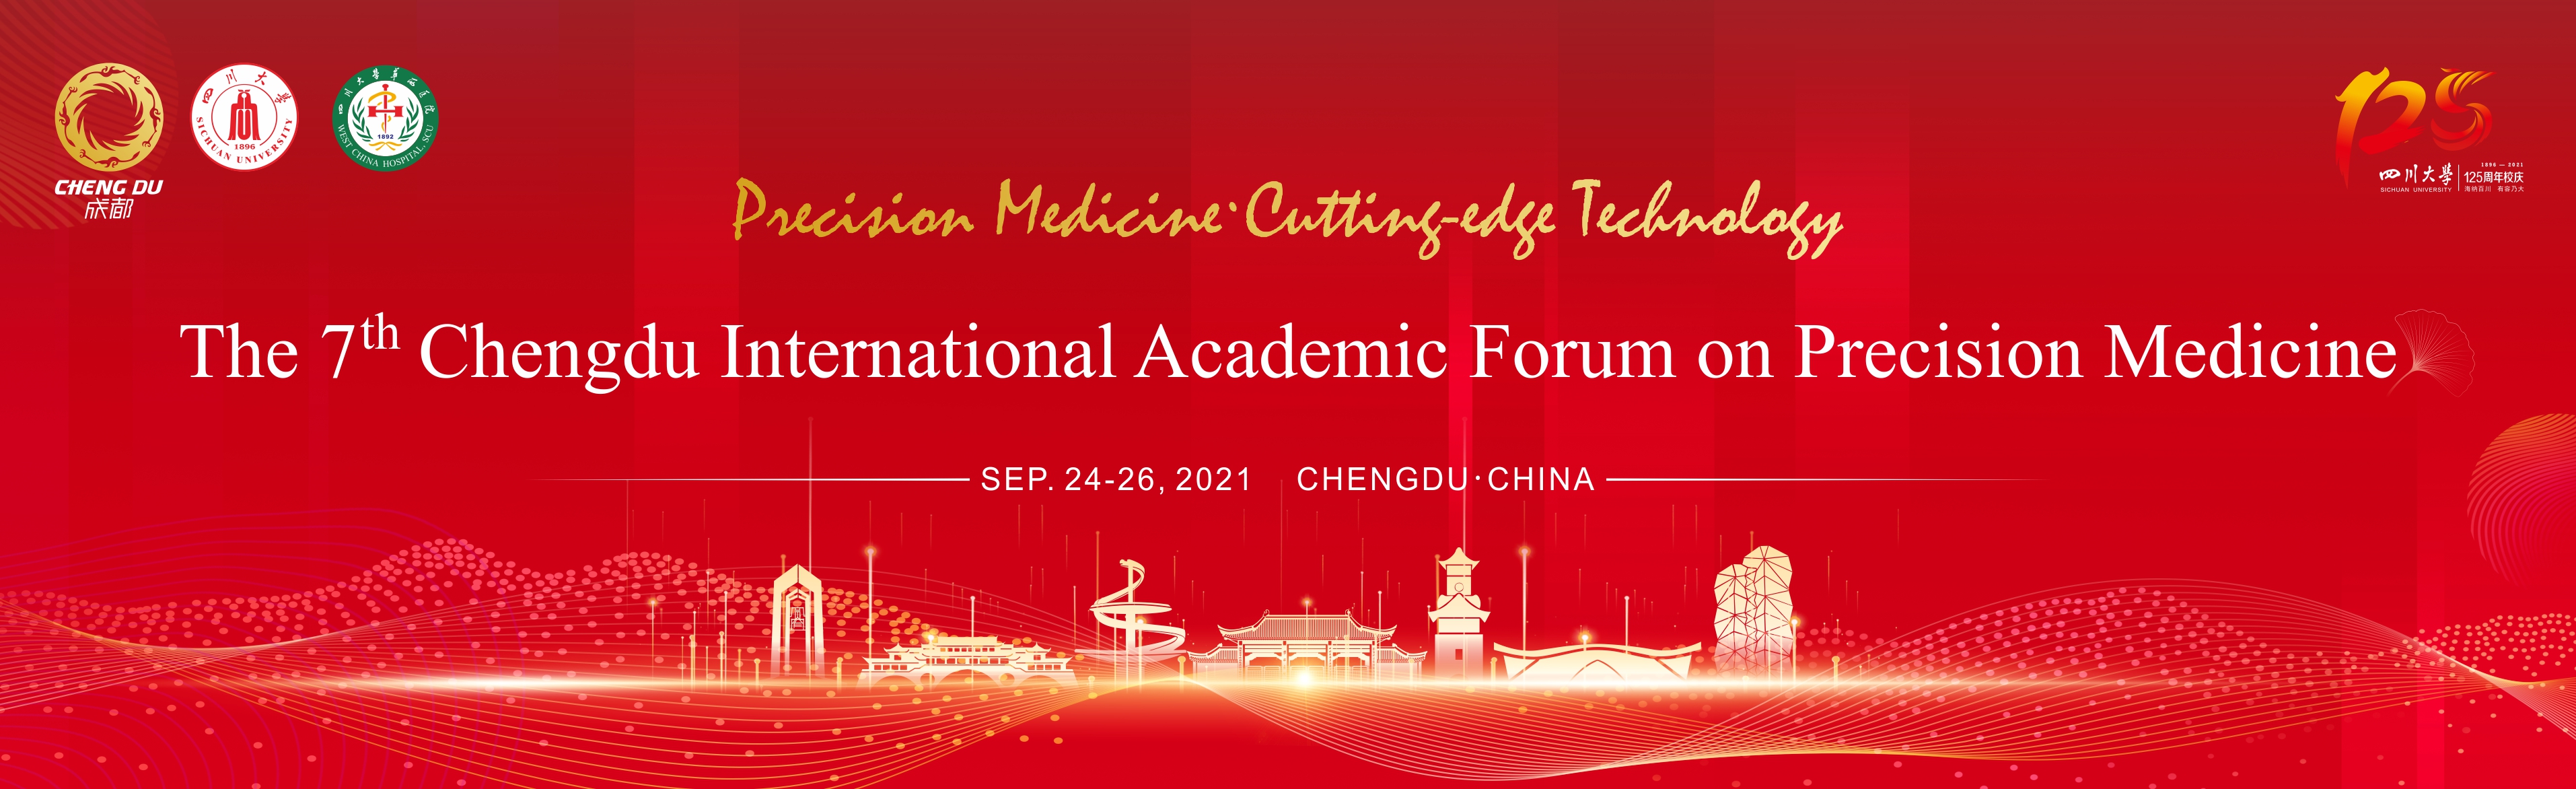 The 7th Chengdu International Academic Forum on Precision Medicine